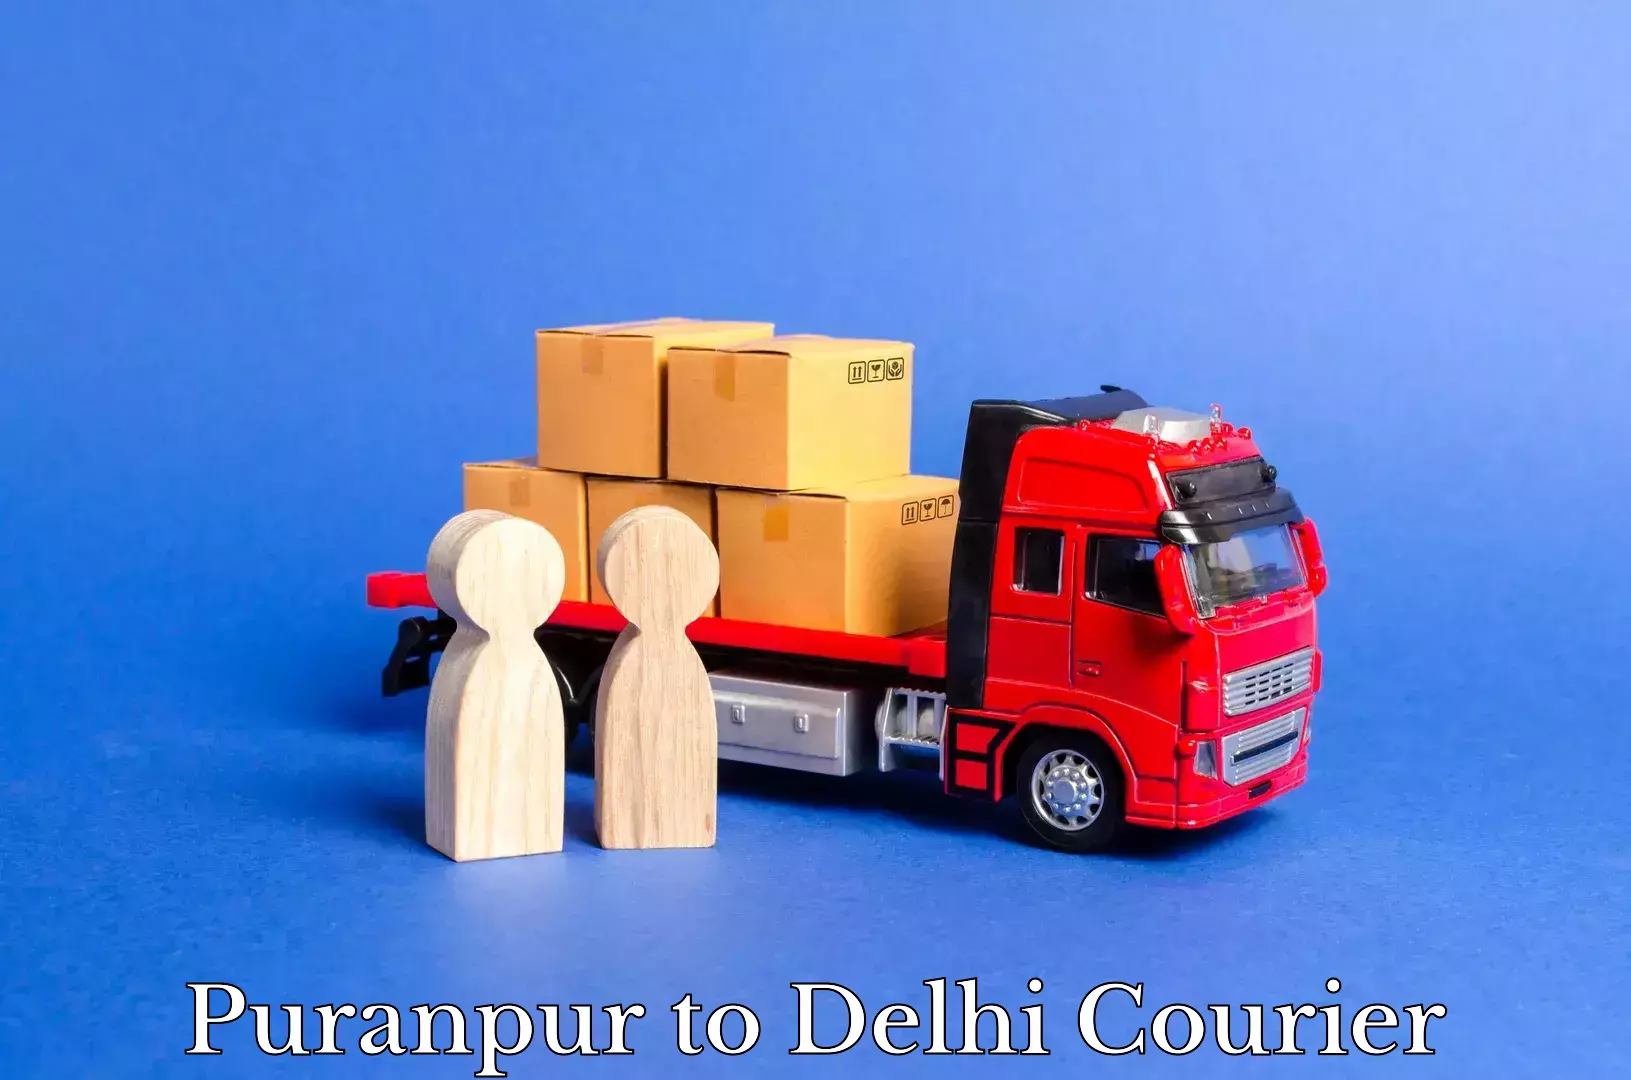 High-priority parcel service Puranpur to Delhi